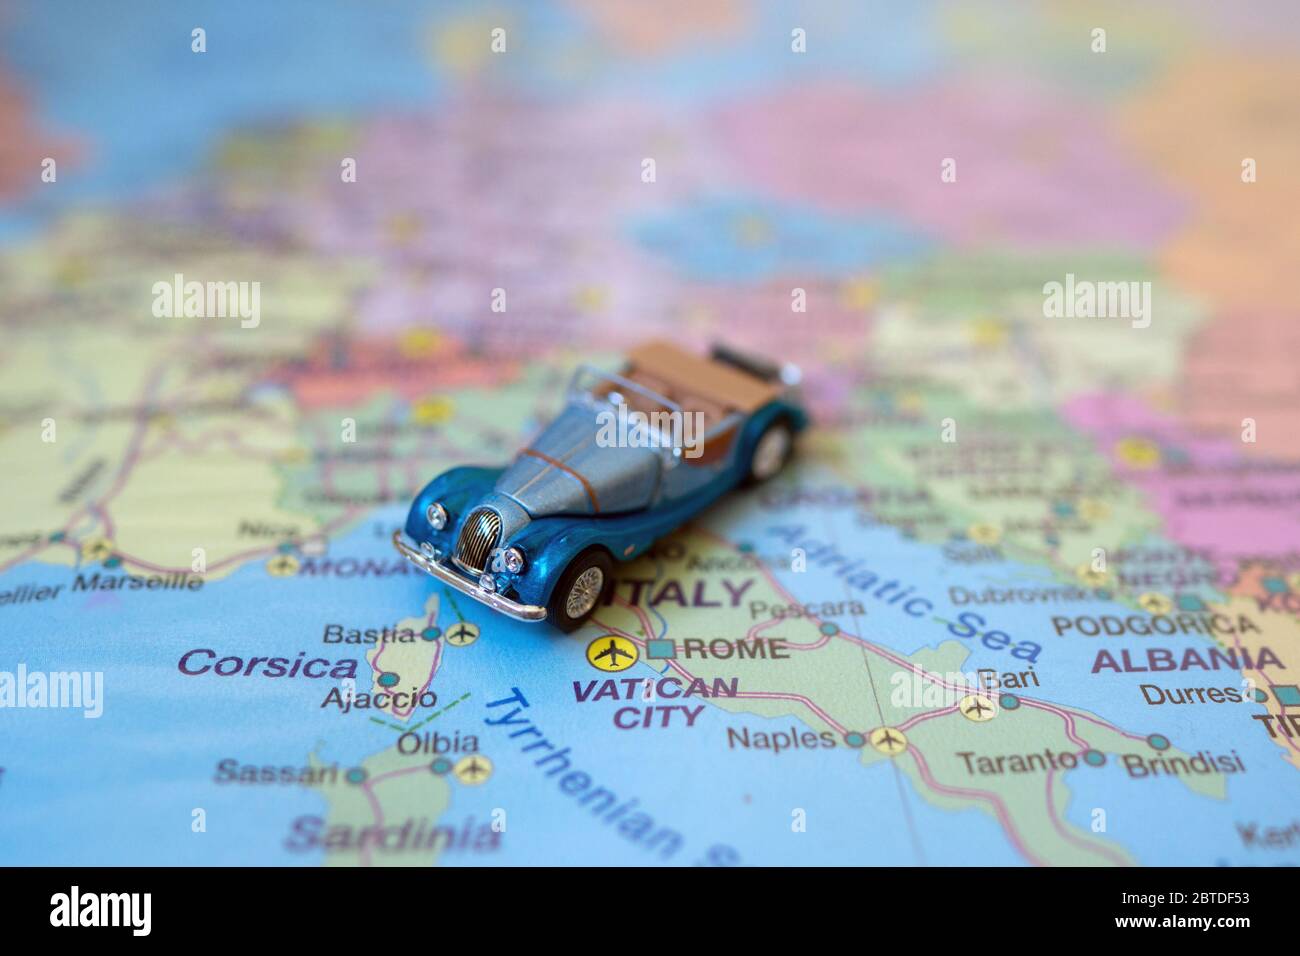 Kleines Spielzeug Retro Auto auf Europa Karte in Italien. Anreise mit dem Auto Konzept. Stockfoto